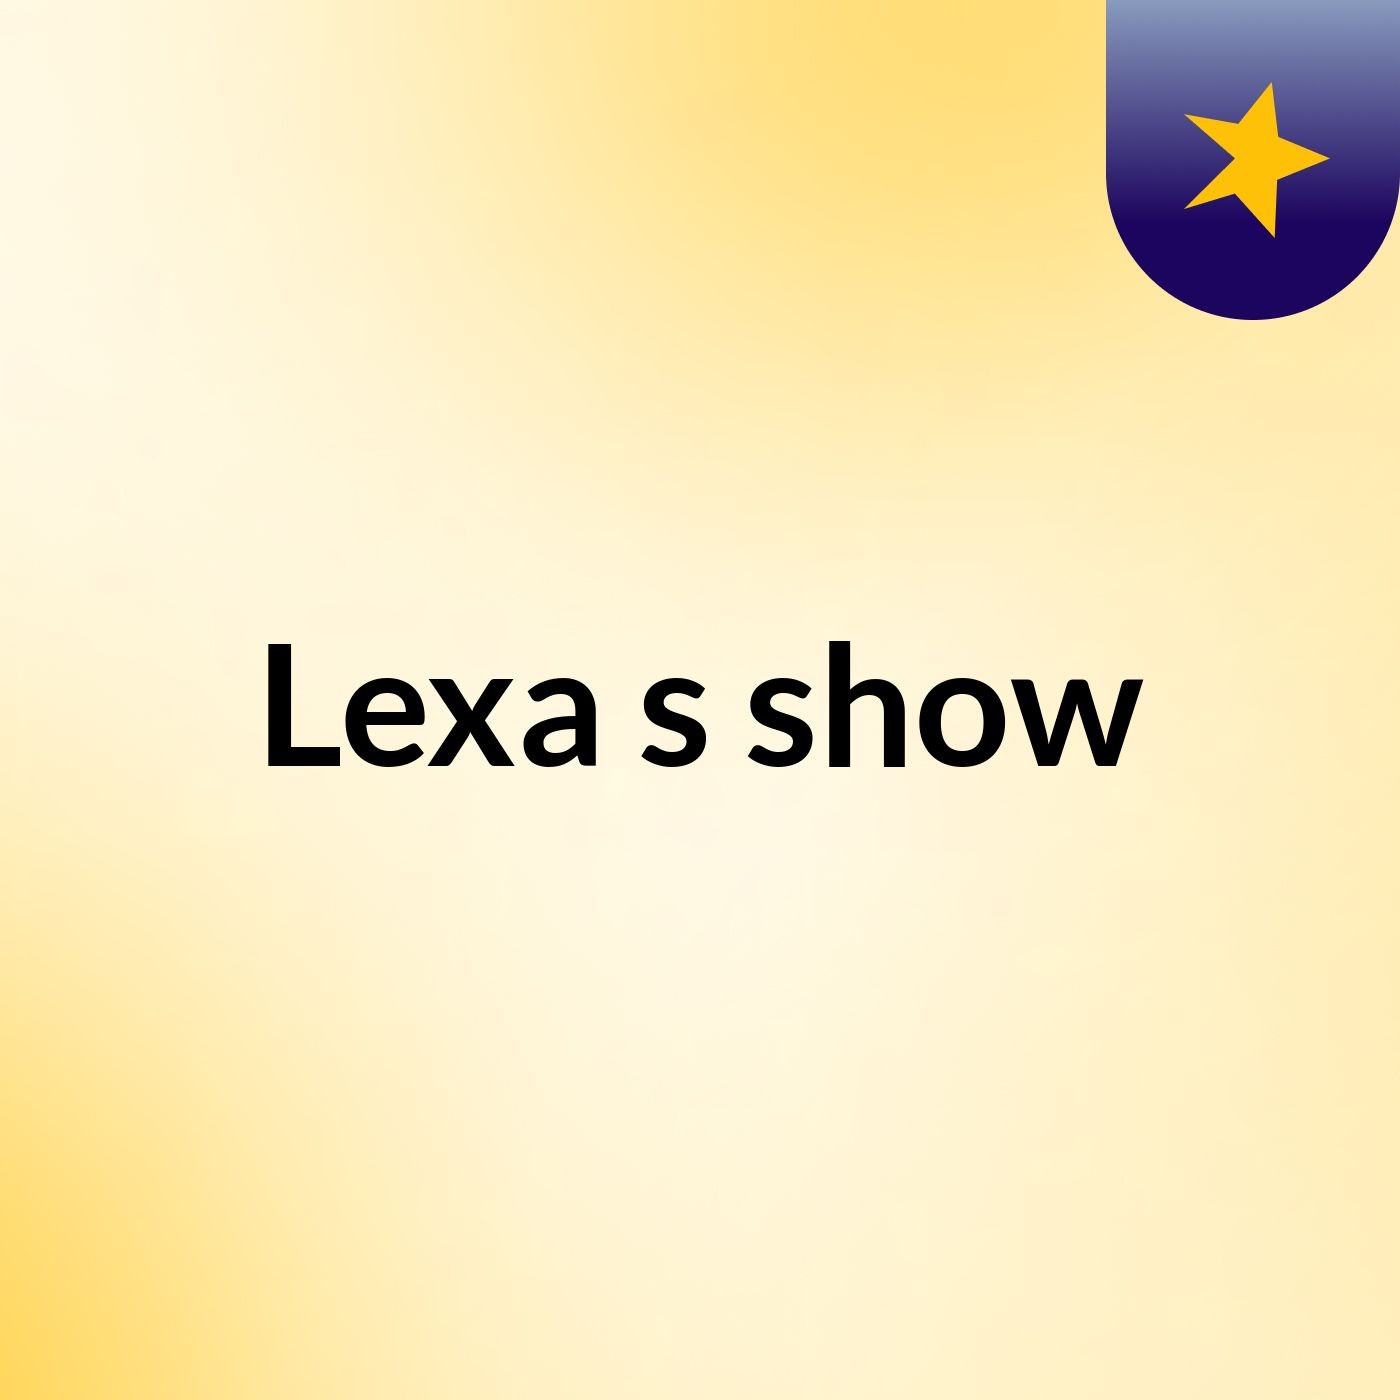 Lexa's show